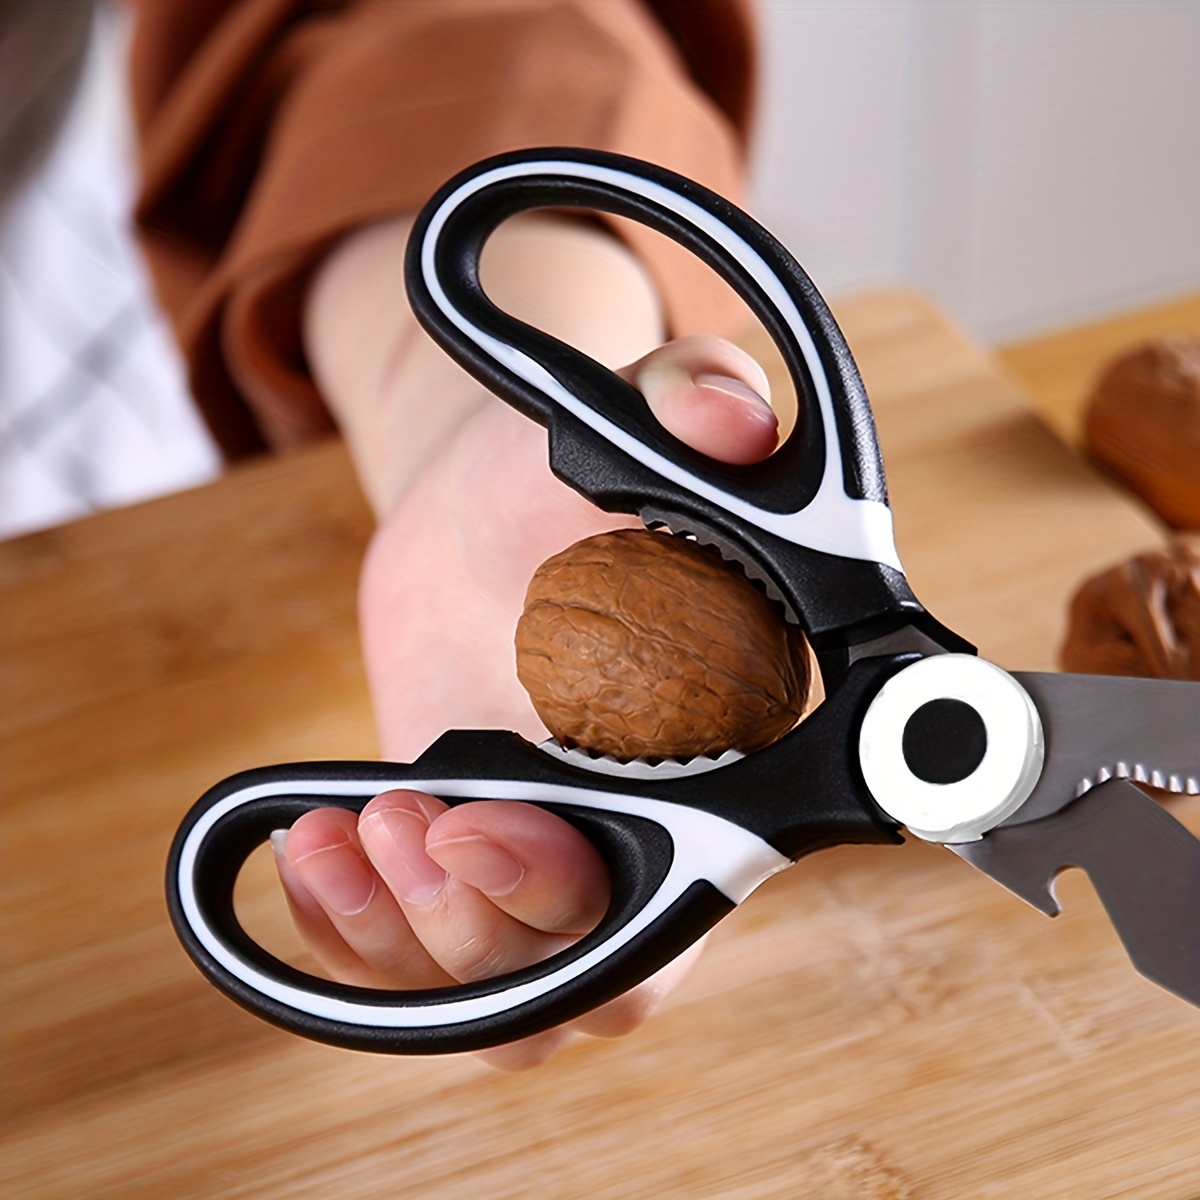 Stainless Steel Kitchen Scissors – Kyoku Knives